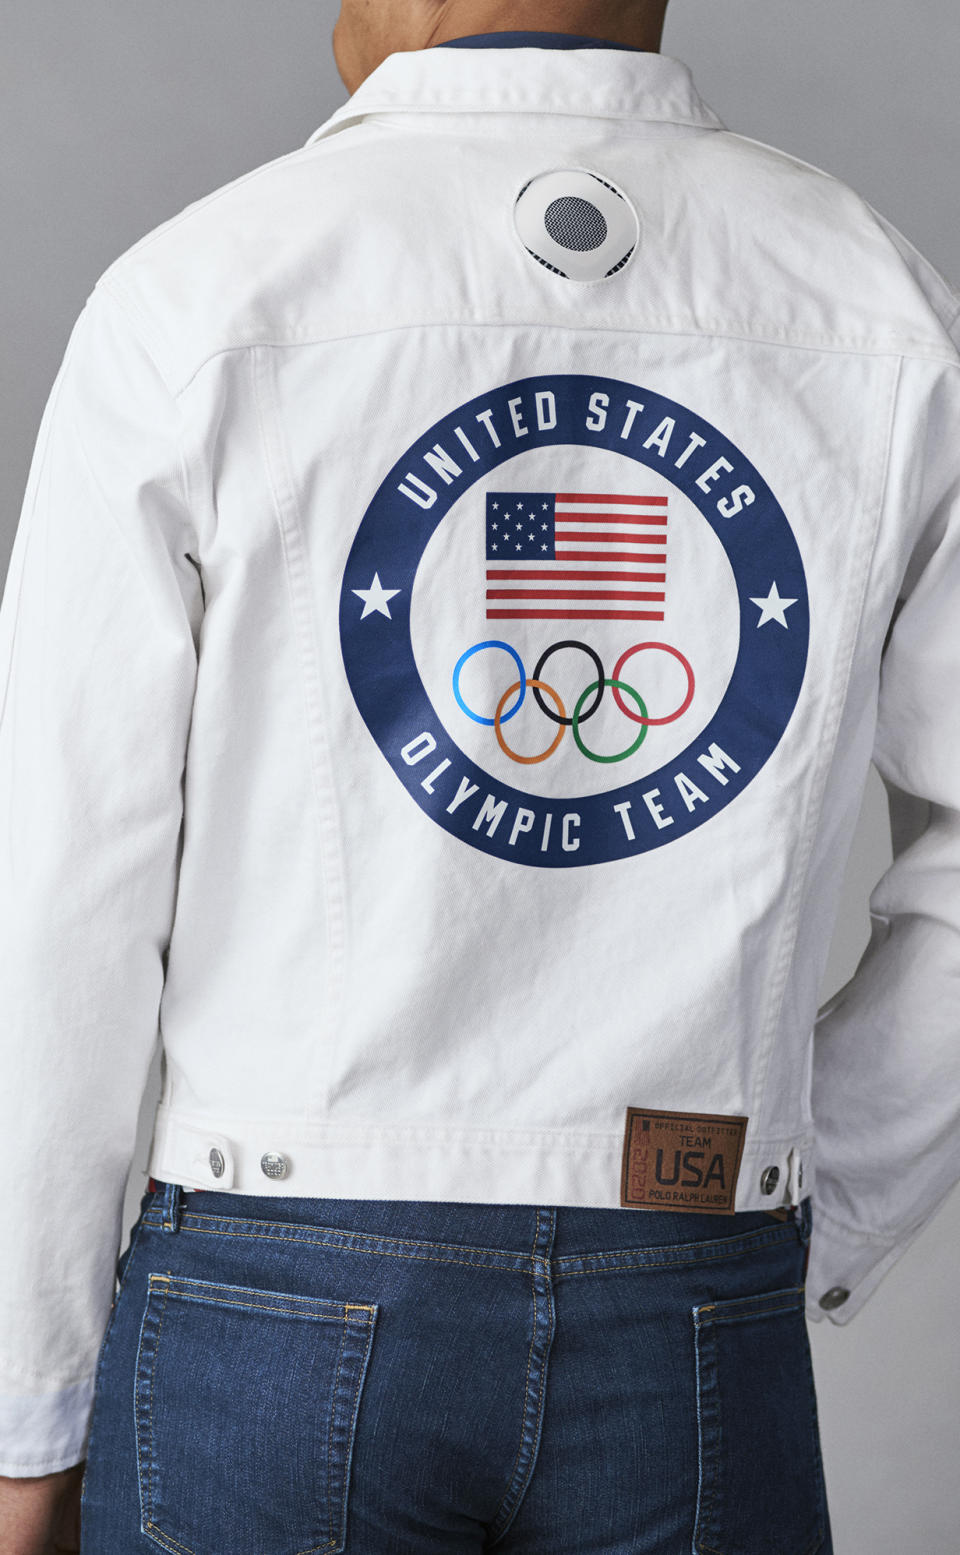 Ralph Lauren’s Olympic flag bearer jacket. - Credit: Joel Griffith